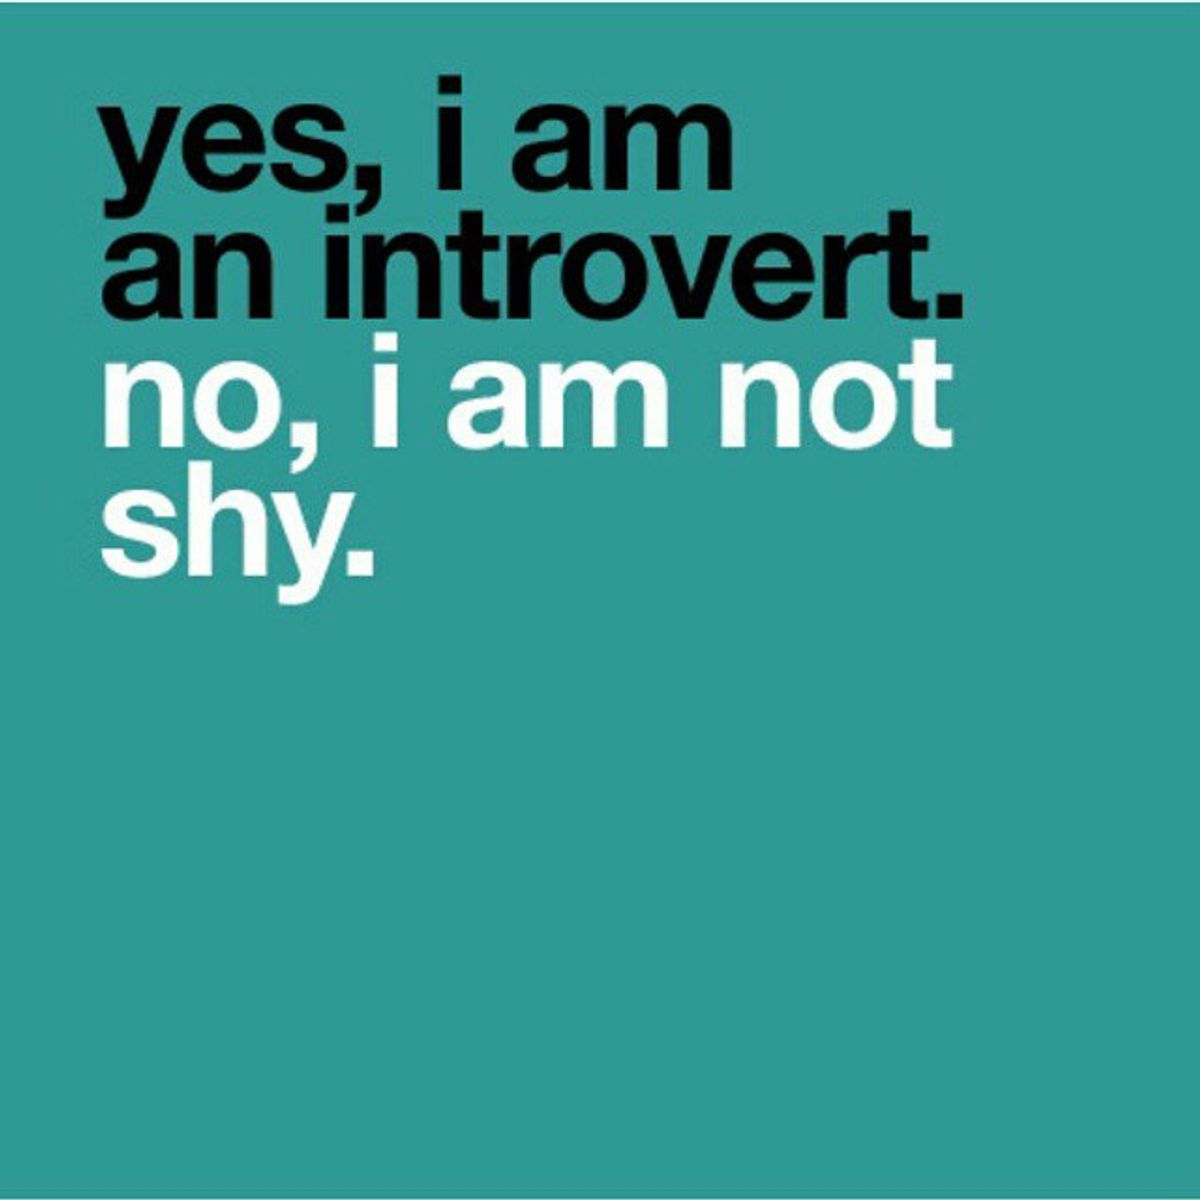 The Introvert's Quiet Struggle